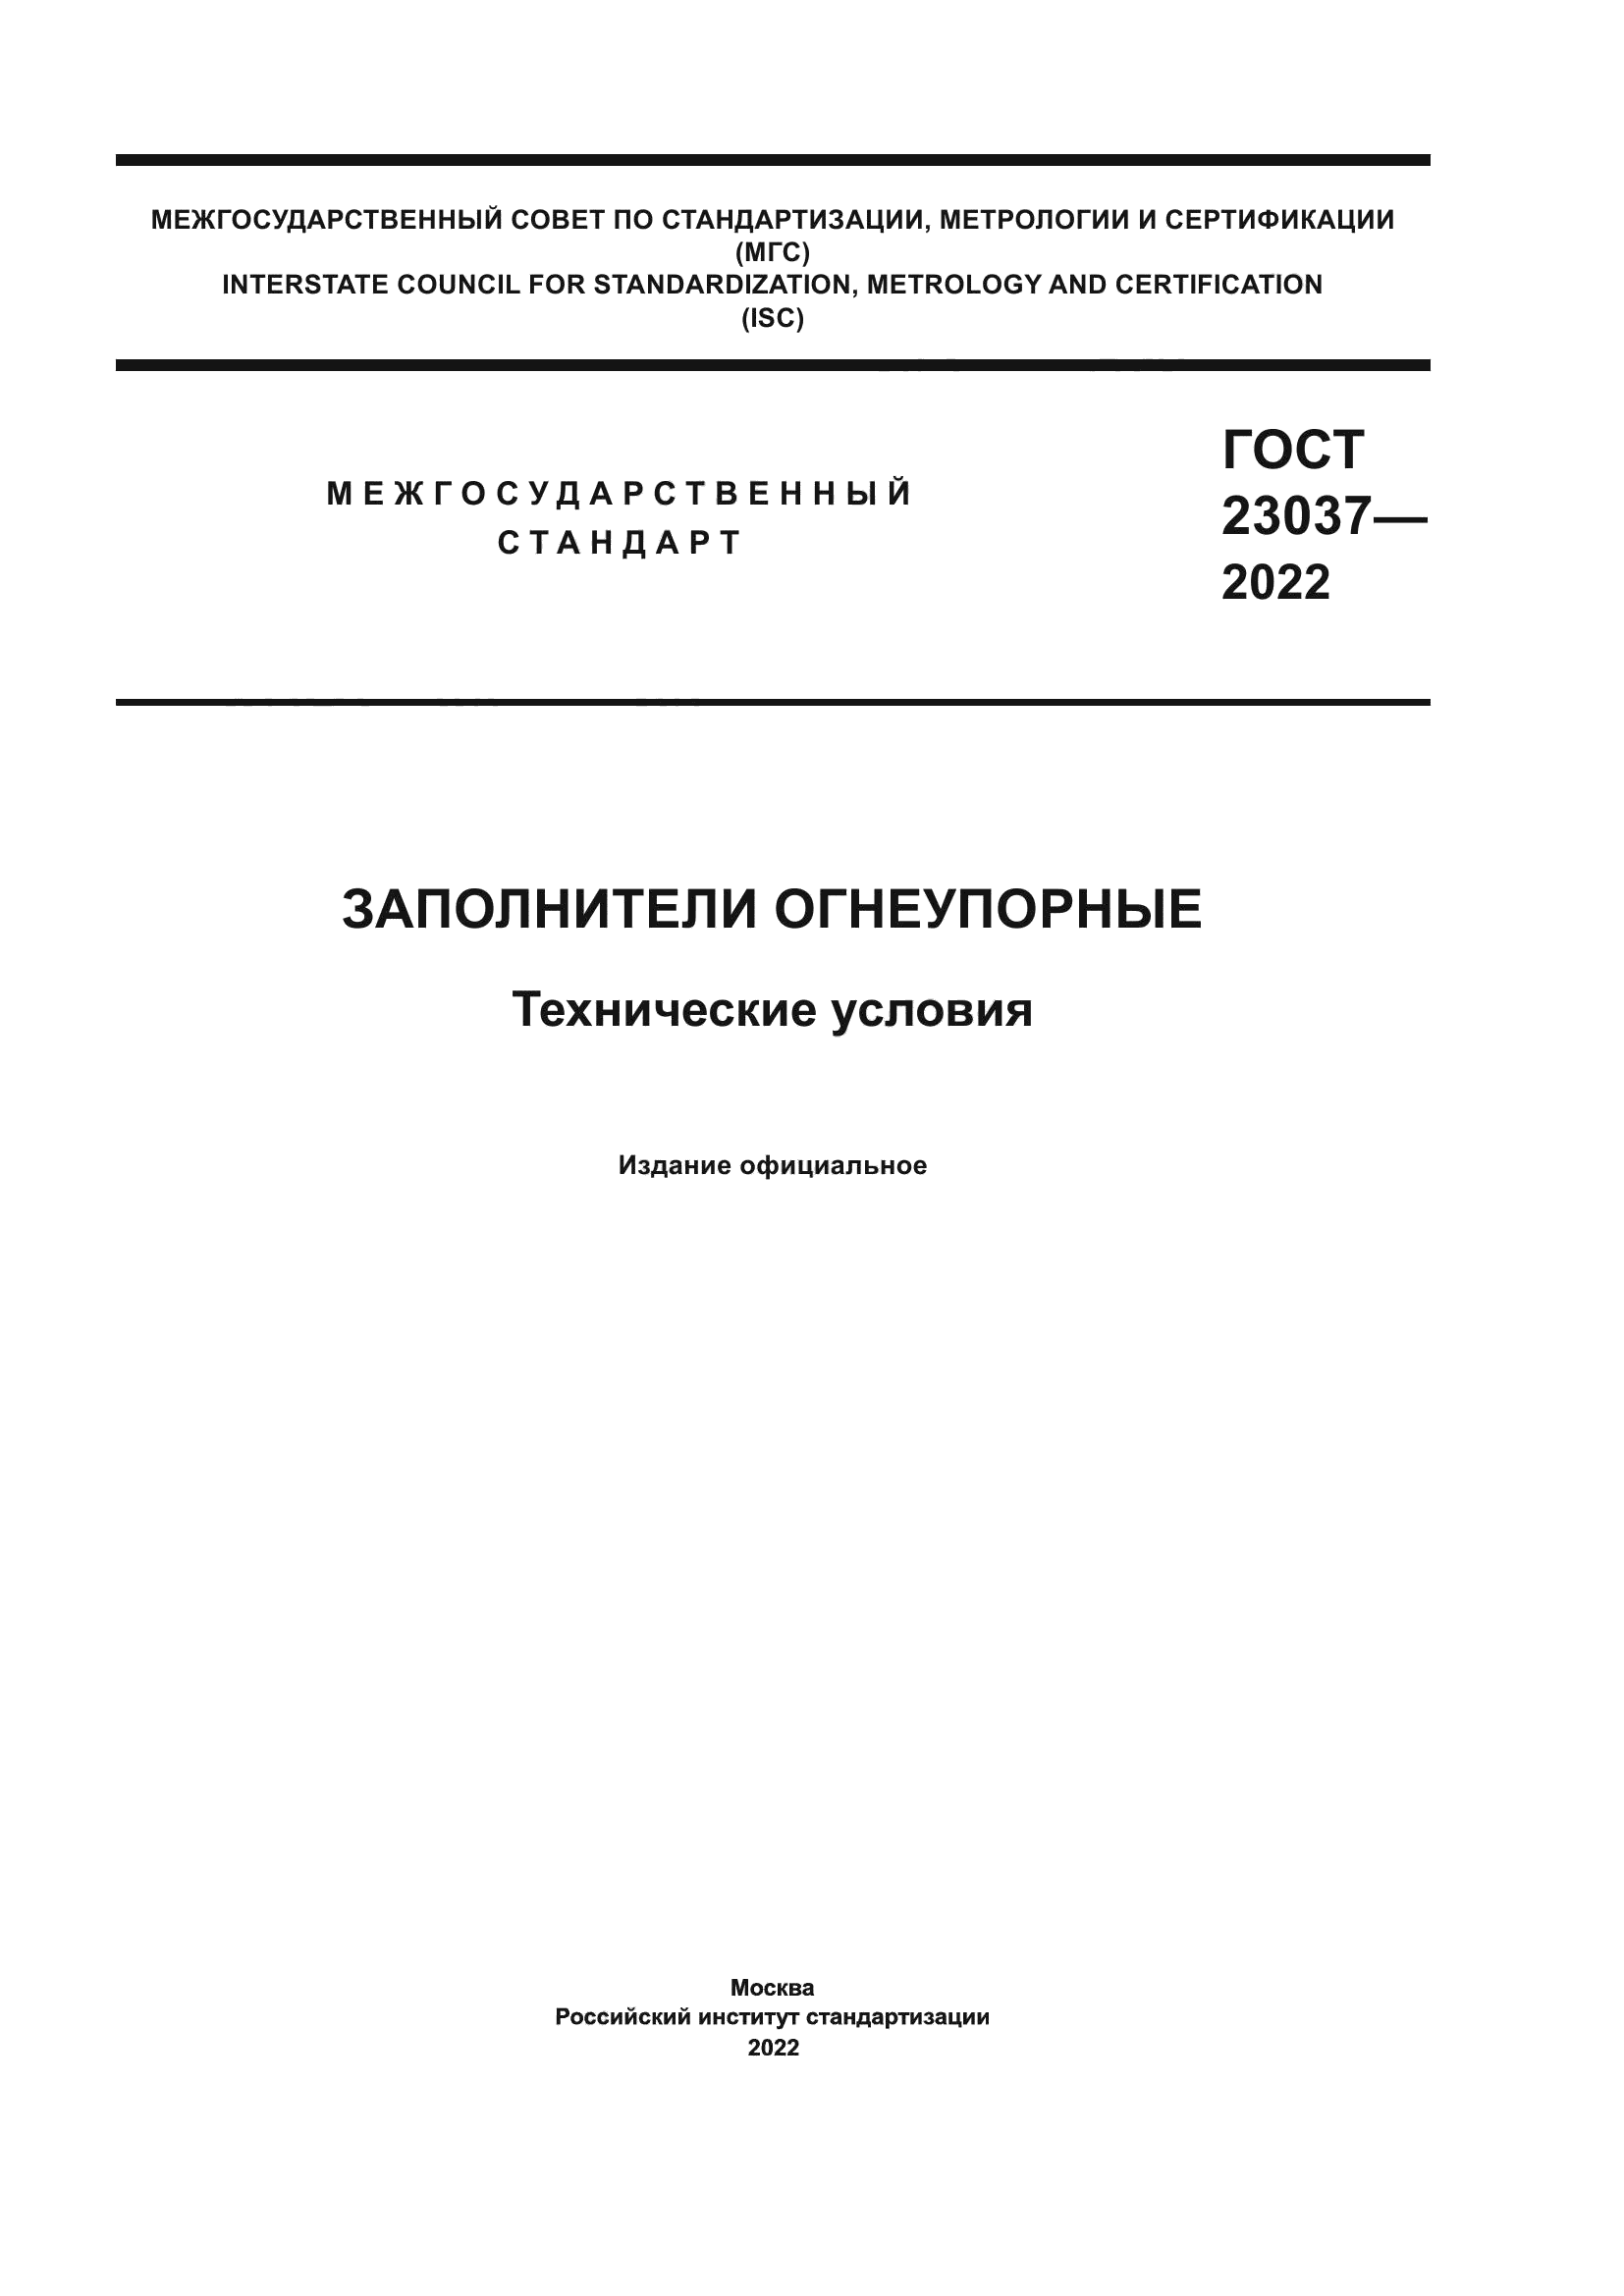 ГОСТ 23037-2022